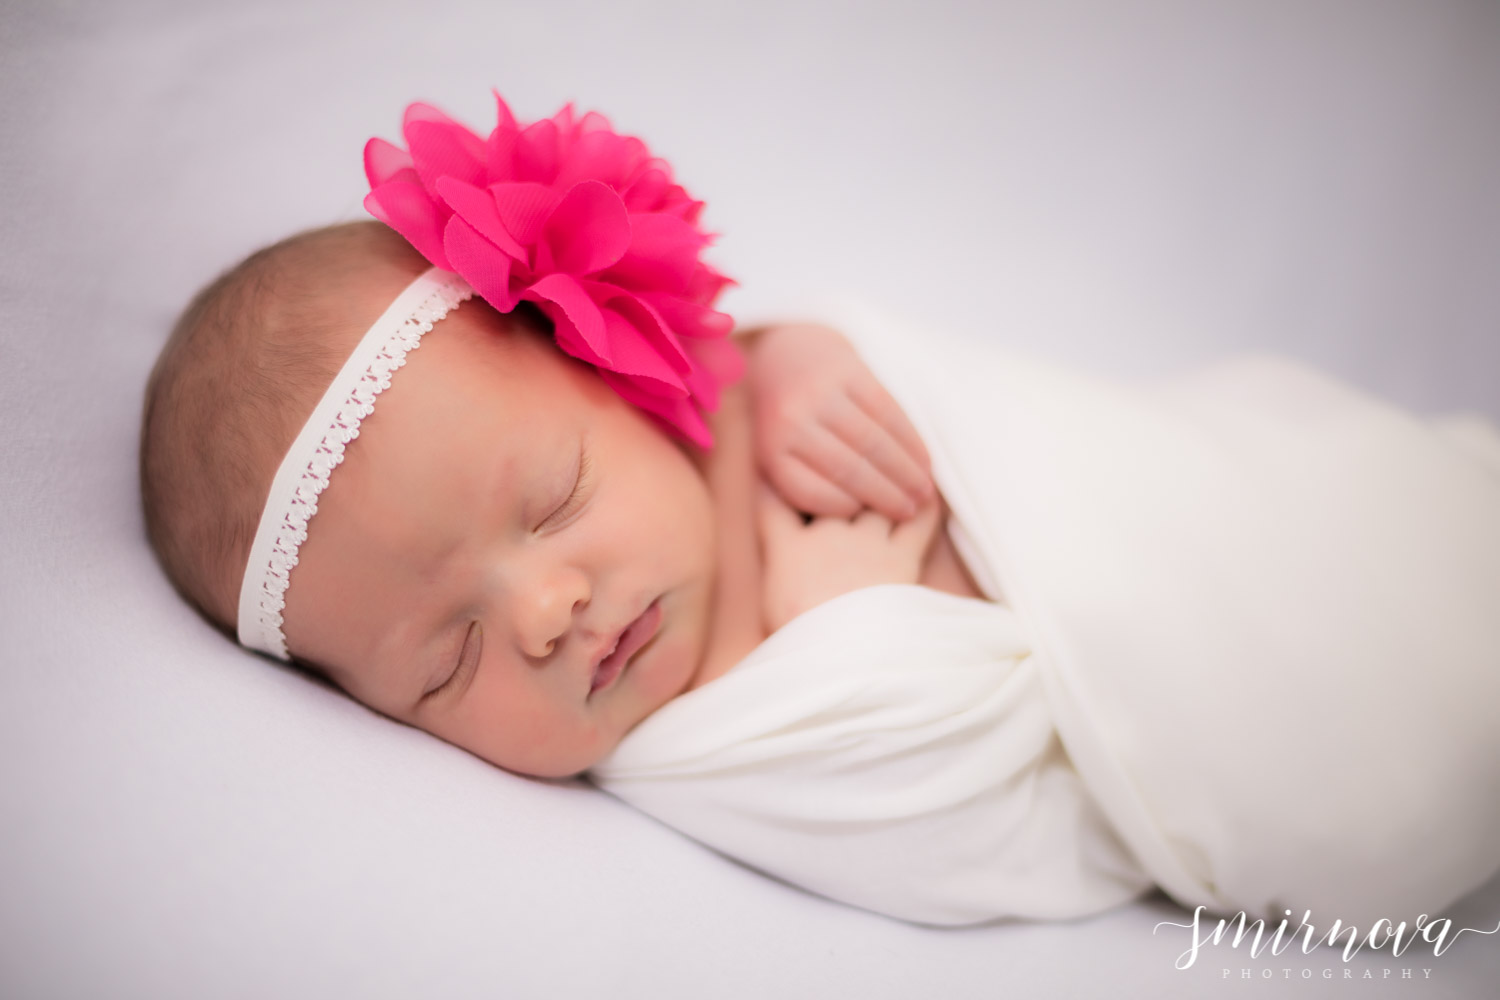 newborn pink flower headband Smirnova Photography by Alyssa